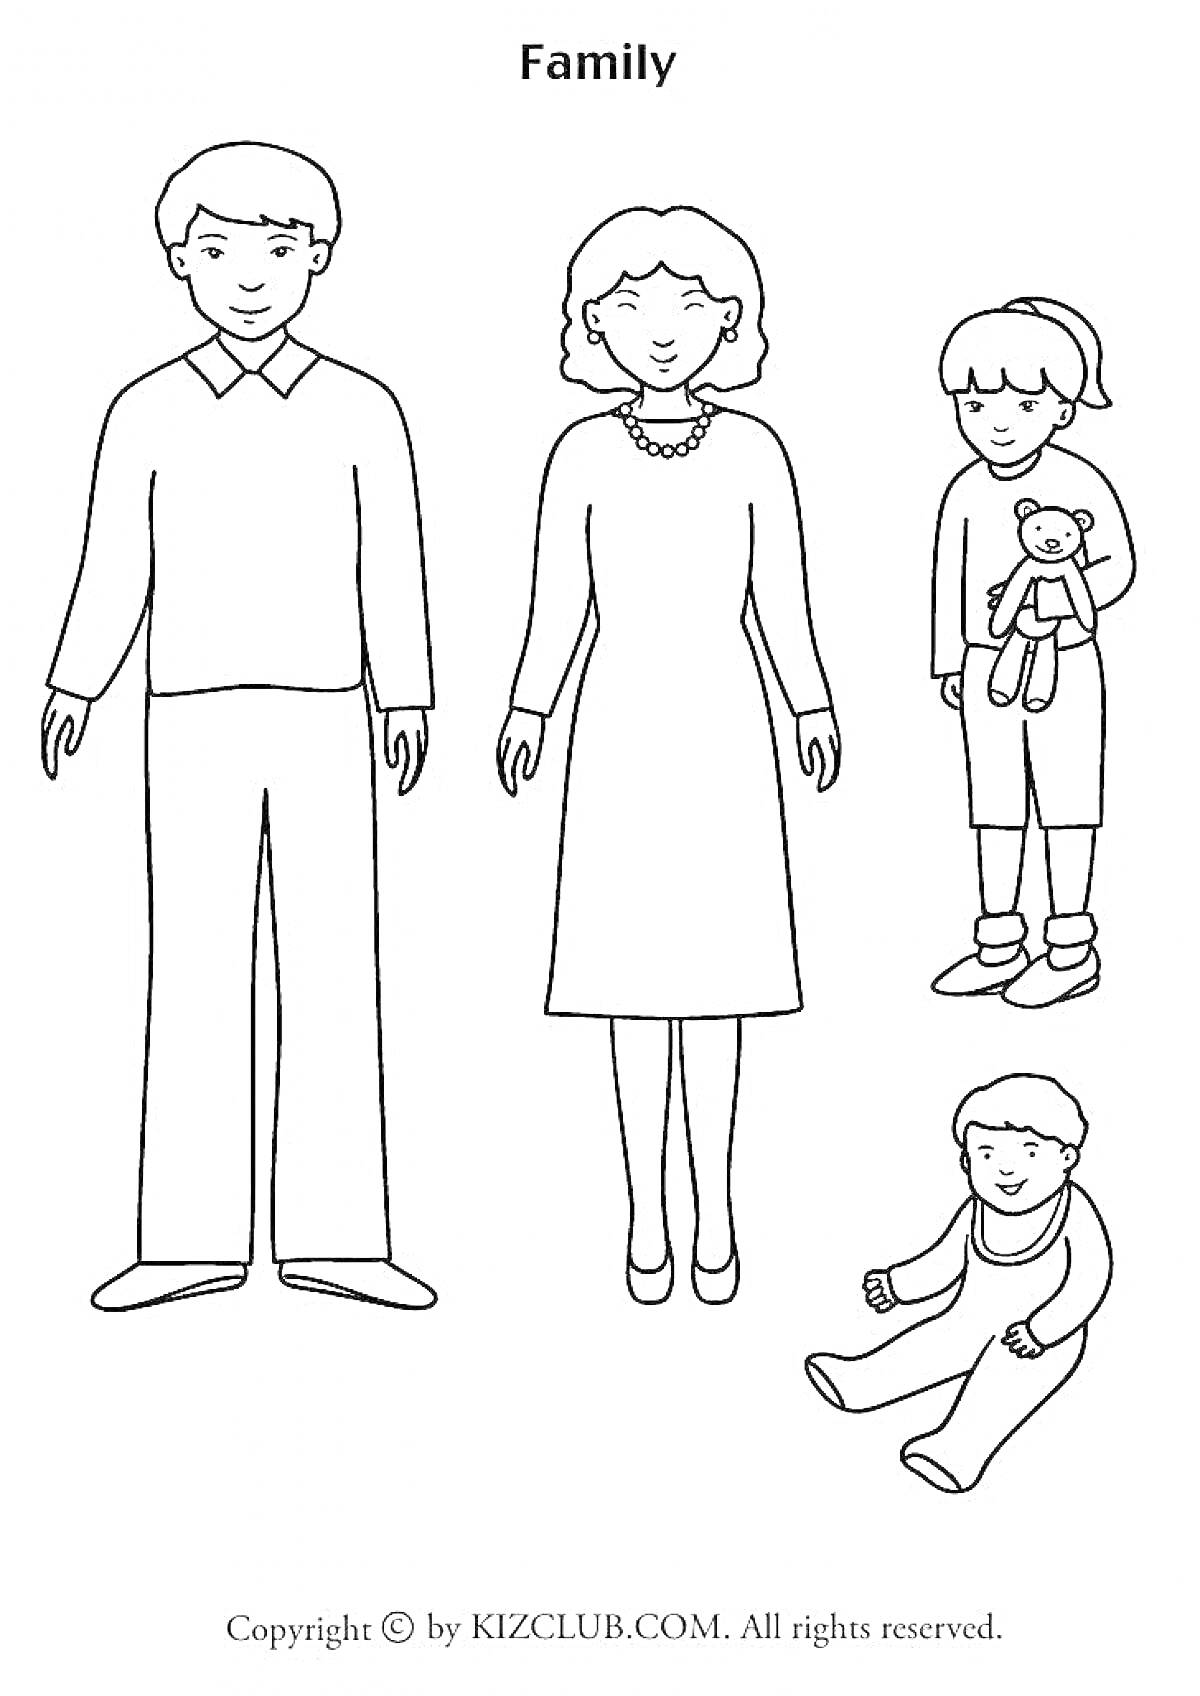 На раскраске изображено: Семья, Родители, Отец, Девочка, Младенец, Медведь